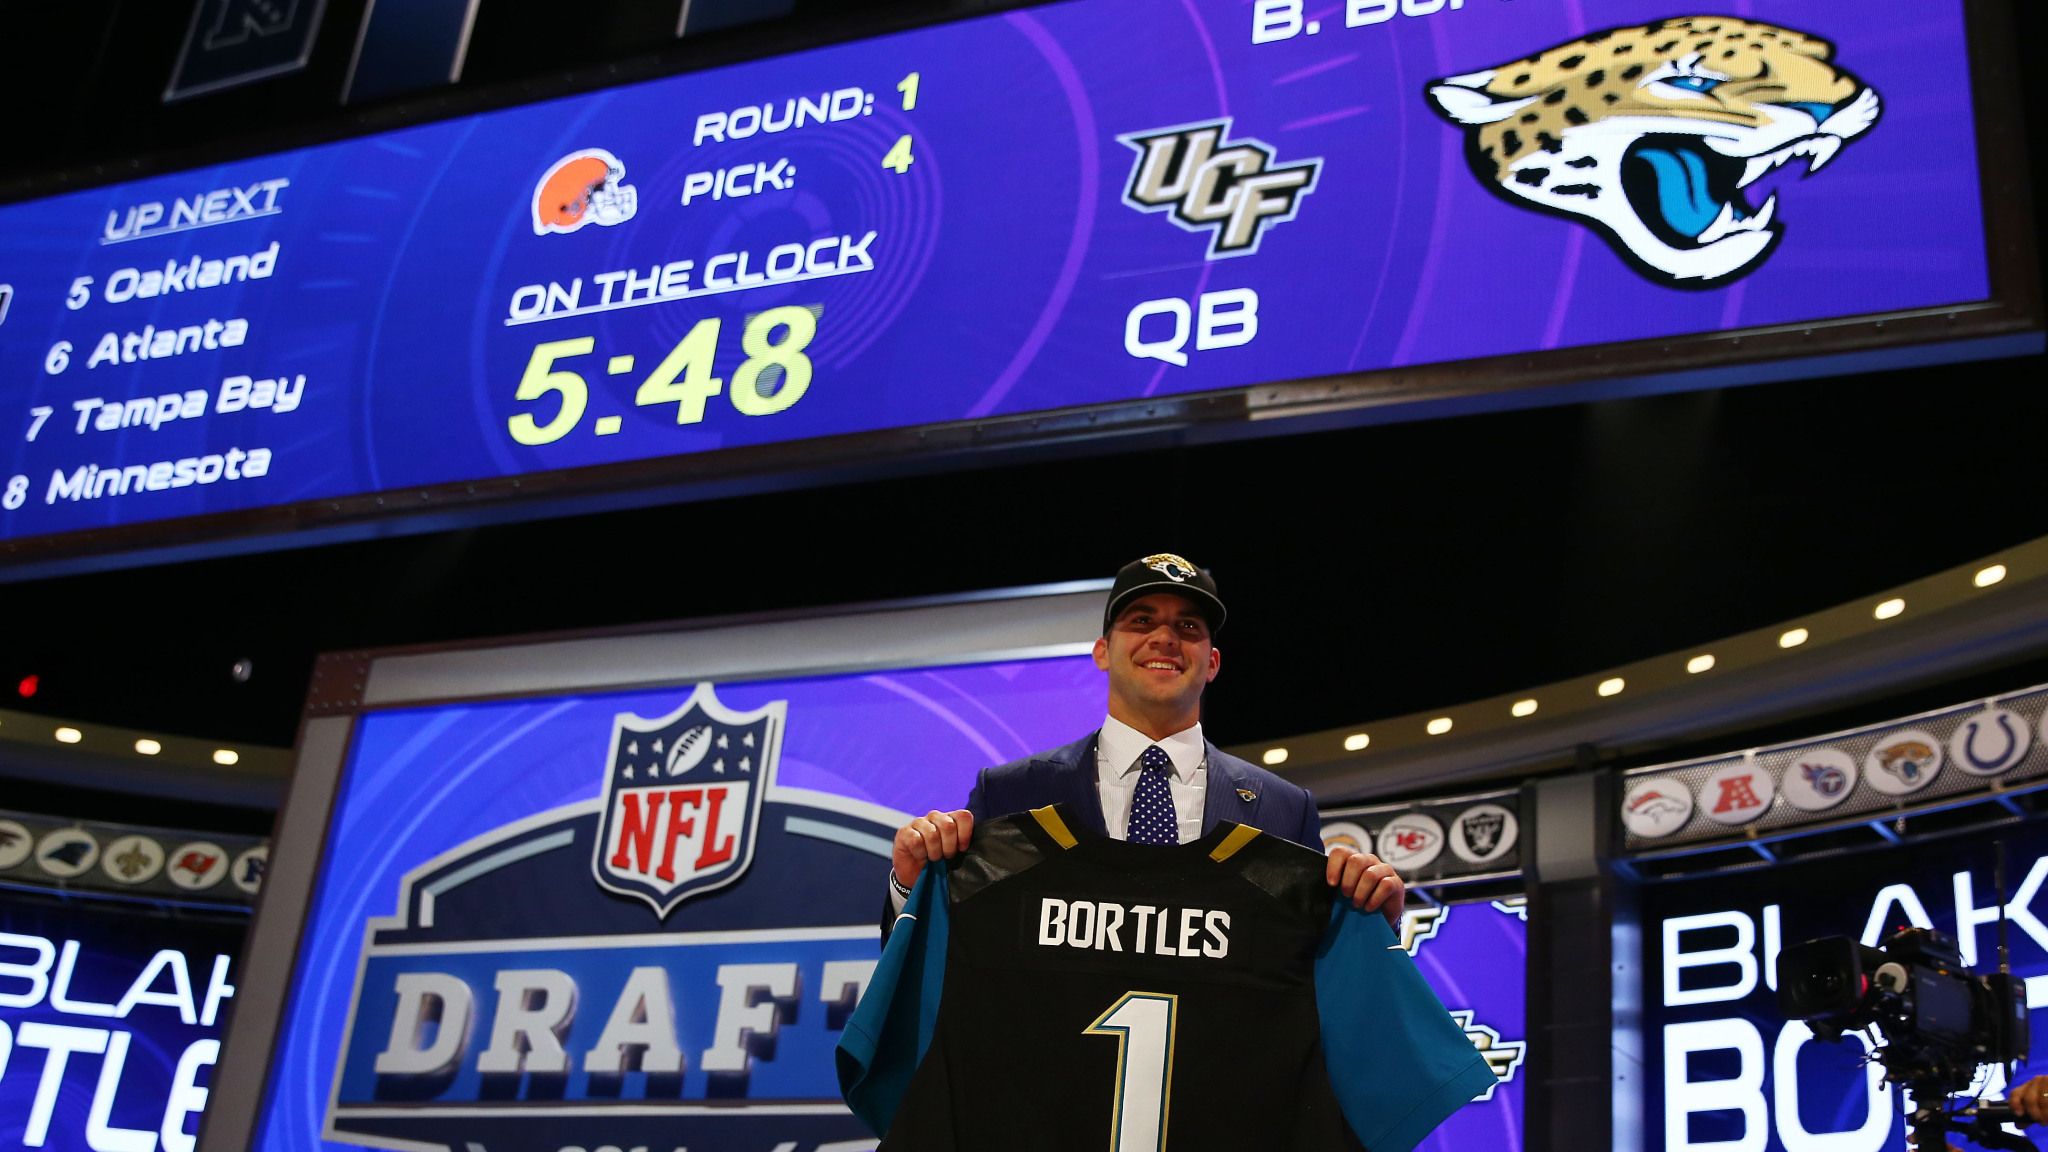 Jacksonville Jaguars to reveal NFL Draft pick from London, NFL News